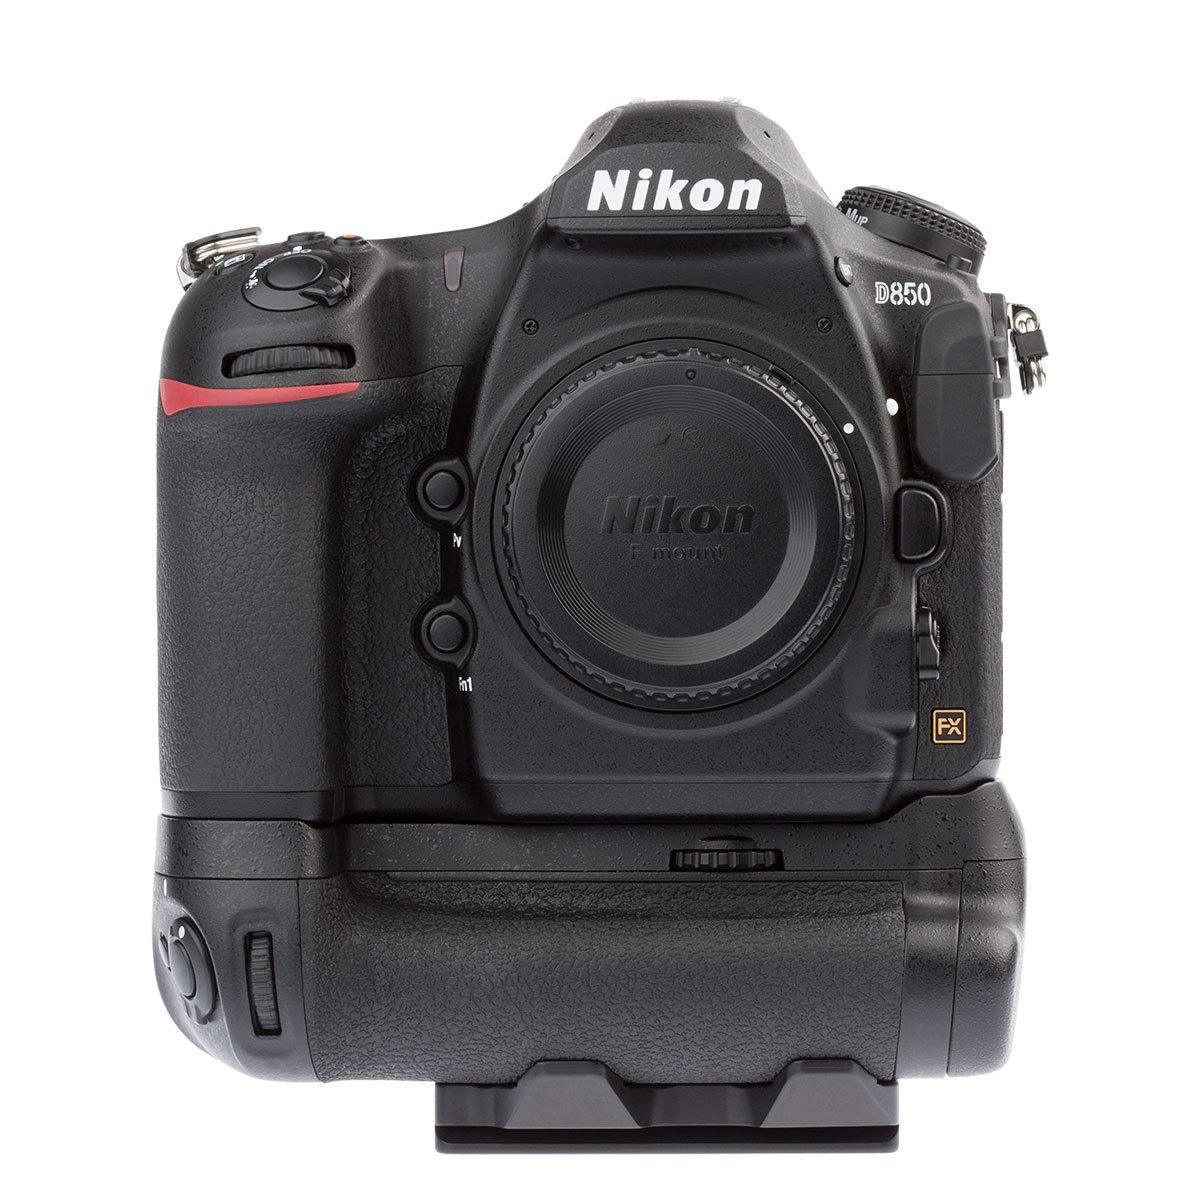 With Nikon D850 with MB-D18 Grip